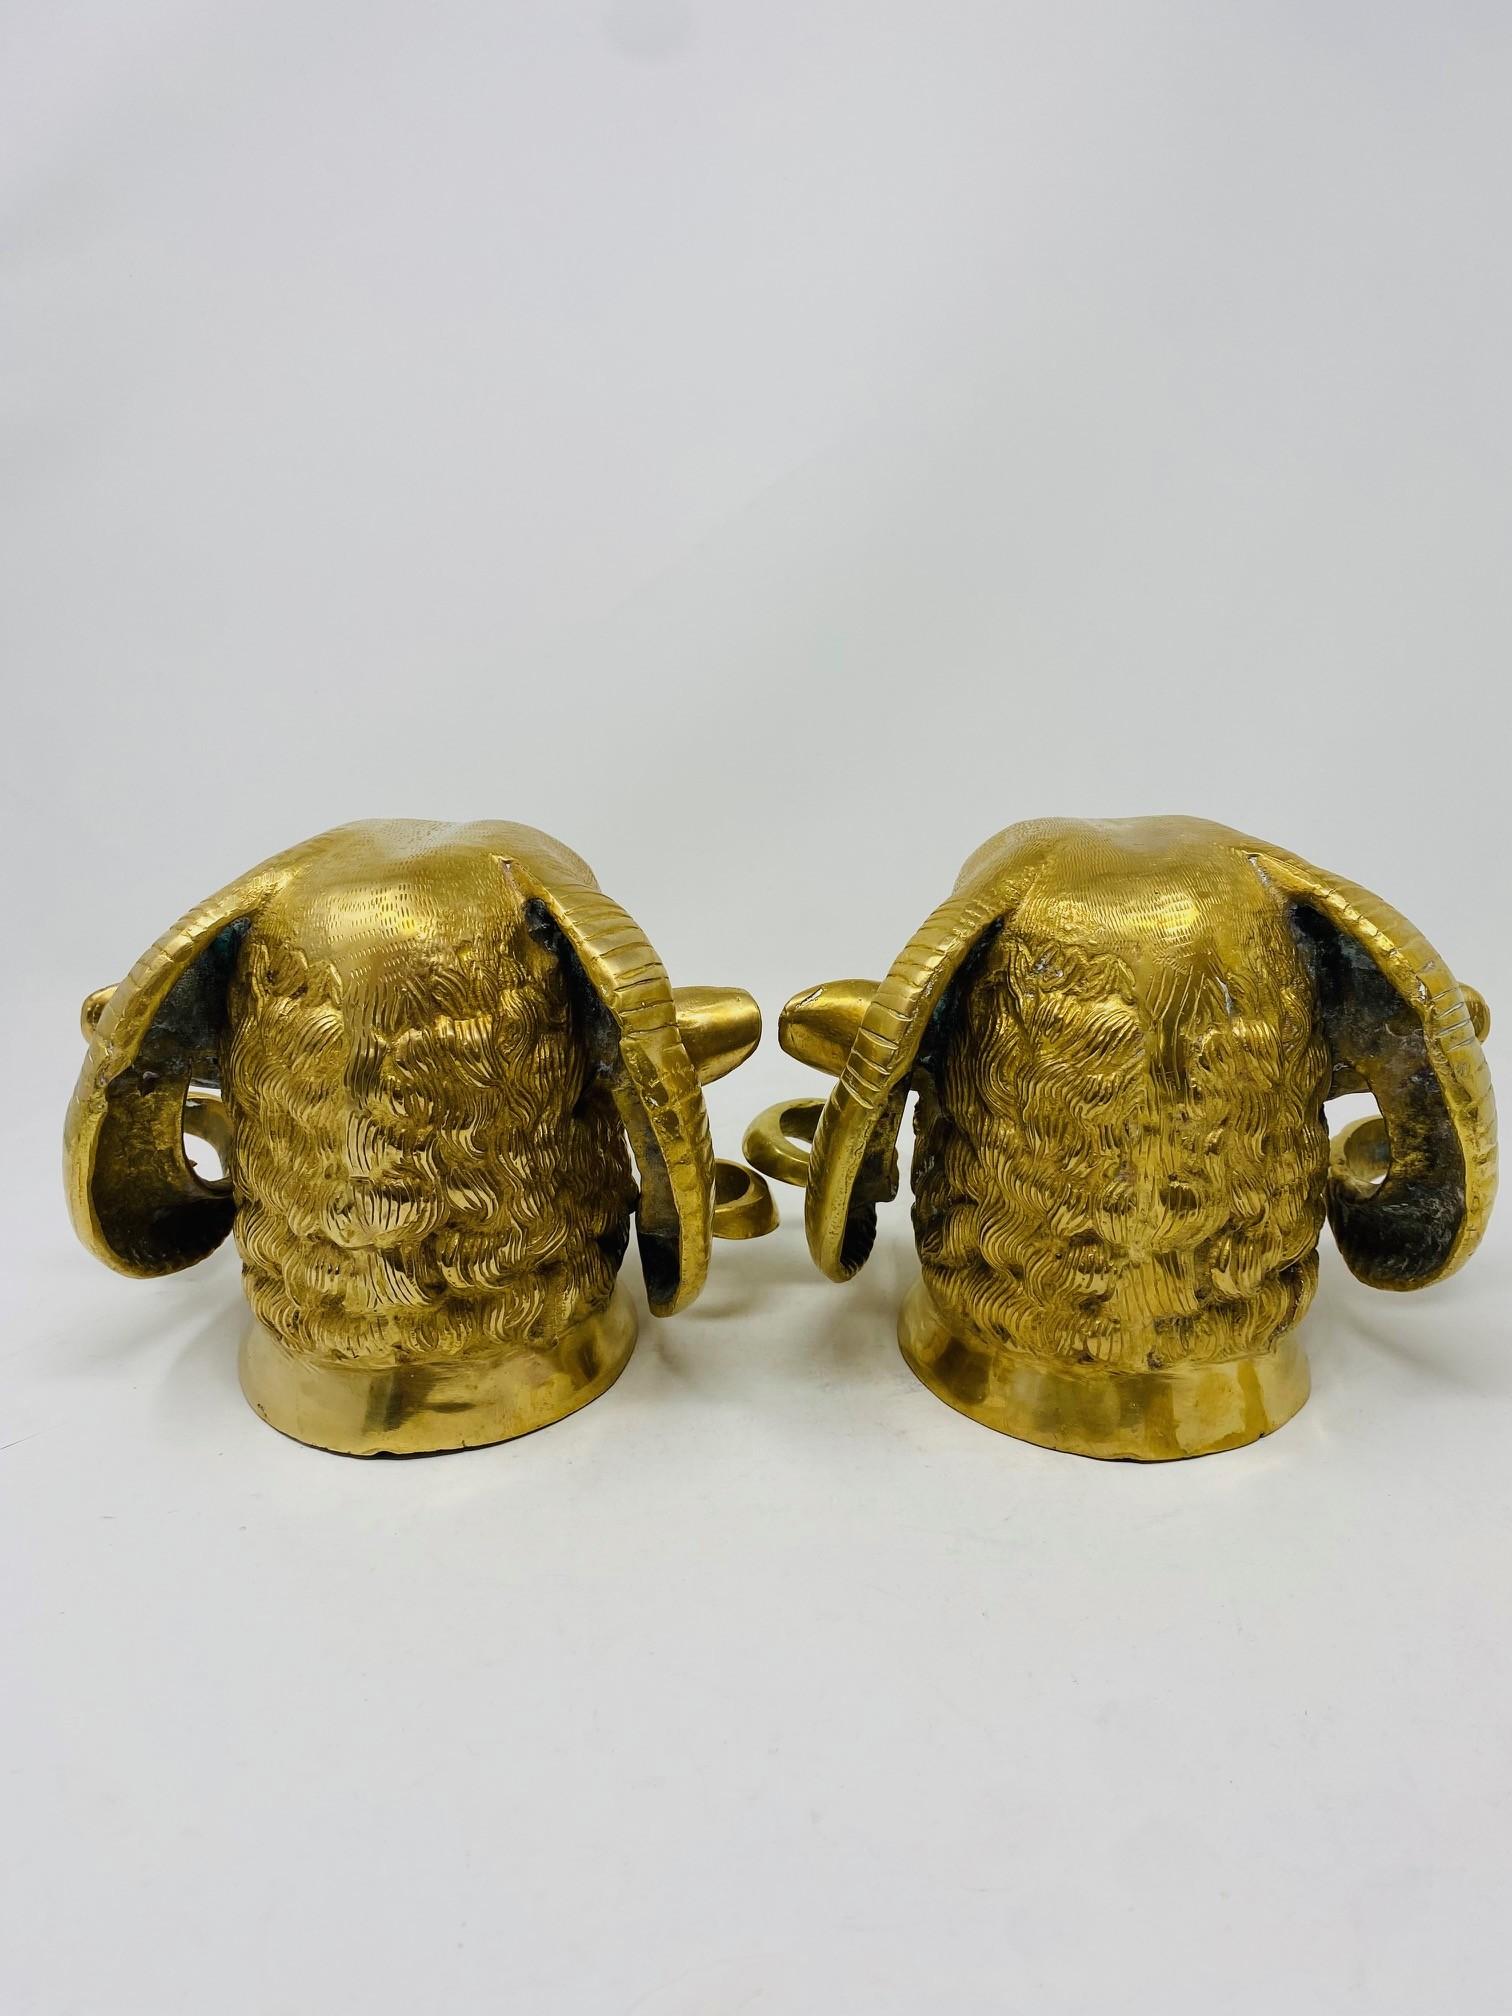 Vintage Pair of Brass Big Horn Ram's Head Sculptures For Sale 4